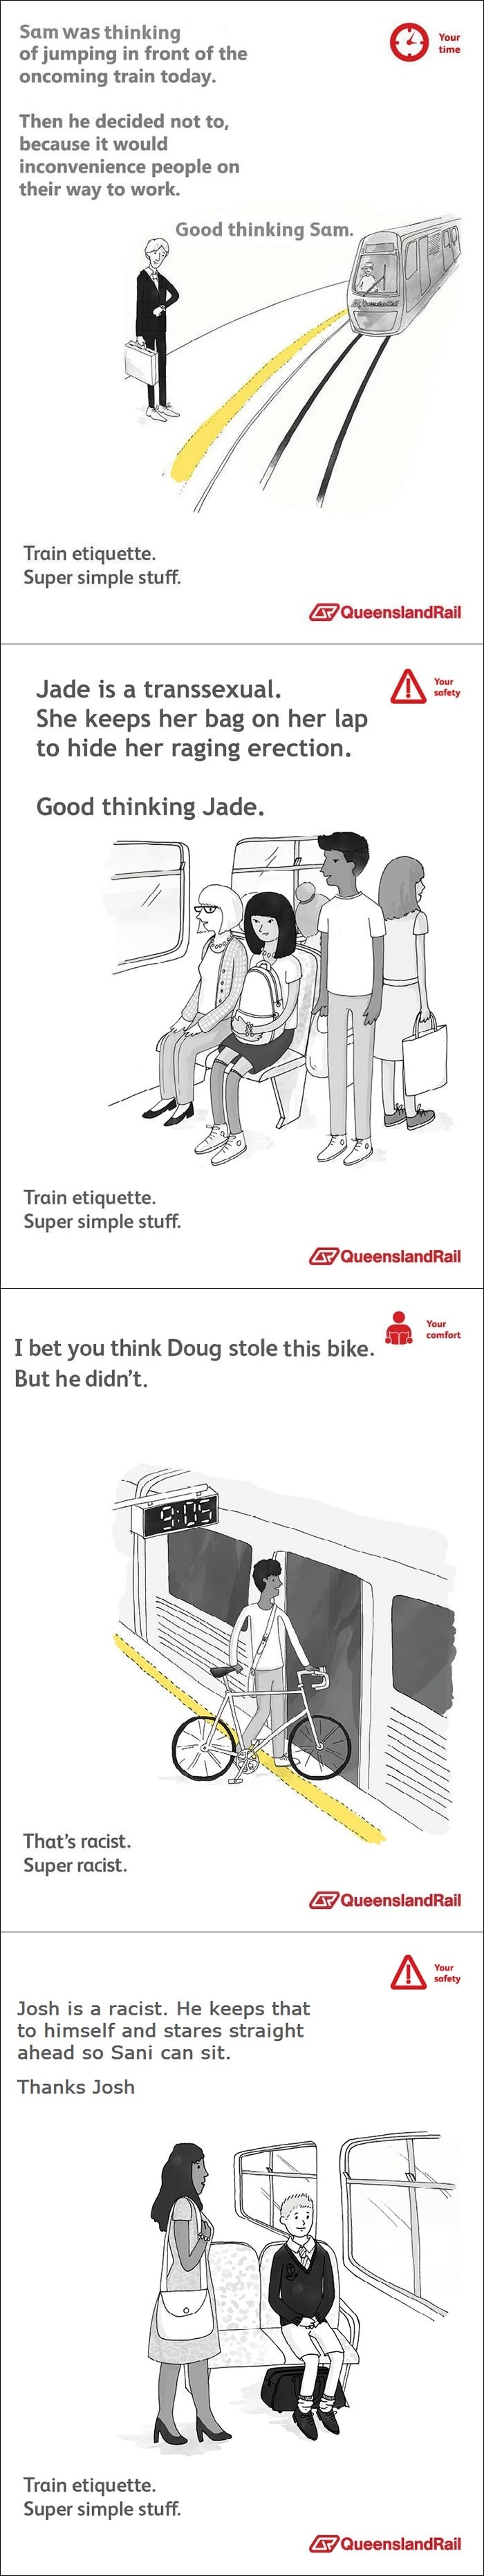 Train etiquette